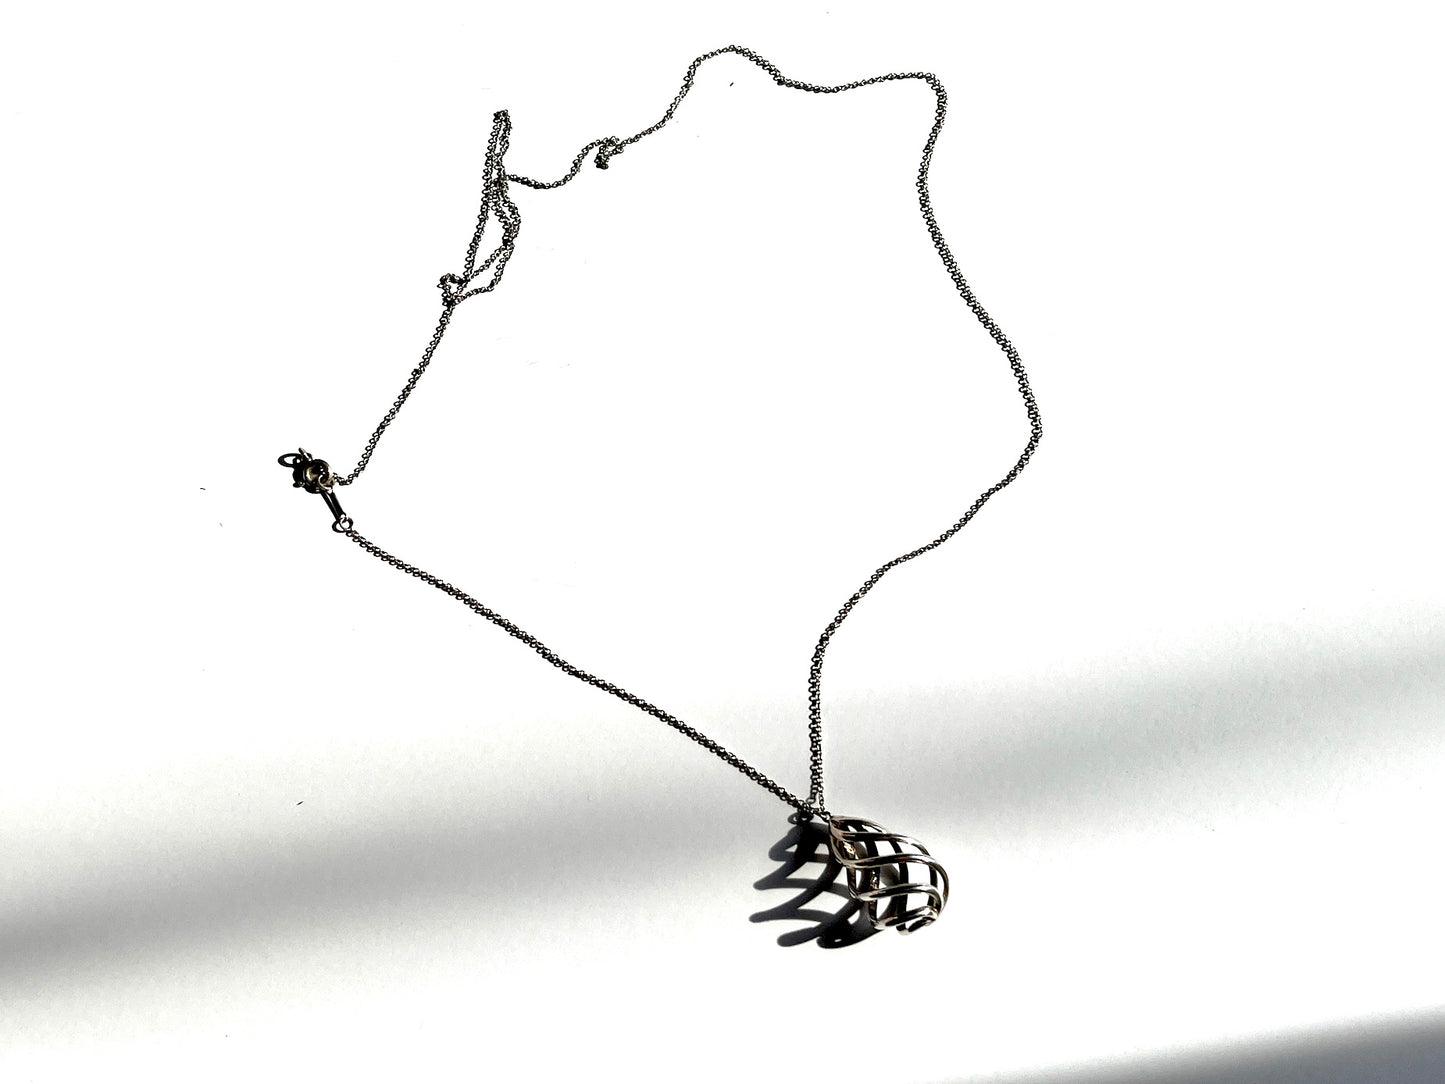 Tiffany & Co Sterling Silver Venezia Luce Pendant Necklace